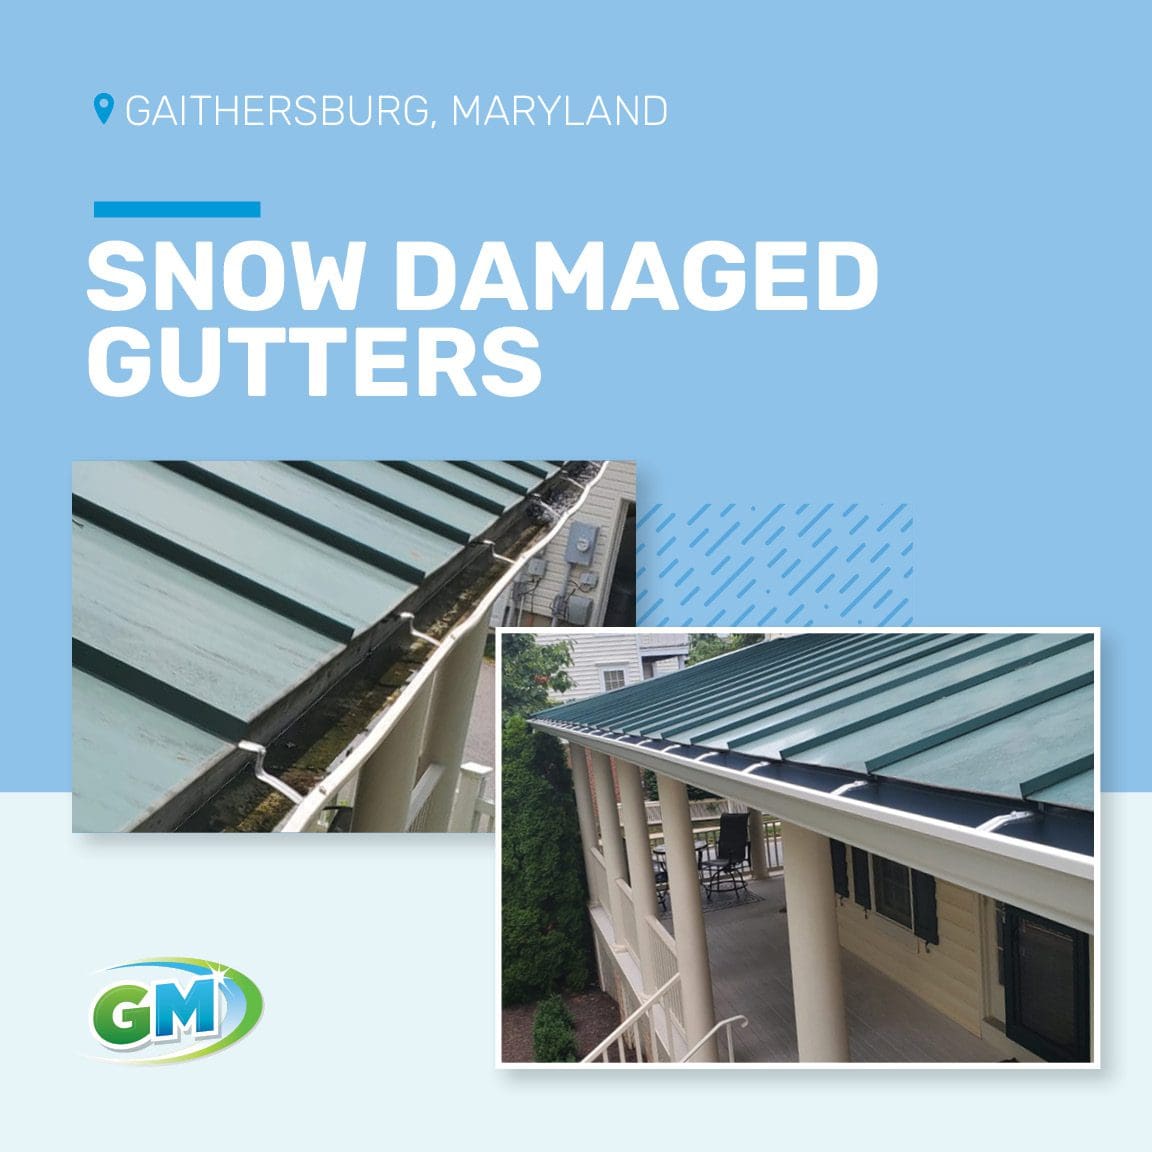 Snow damaged gutter replacement in Gaithersburg, Maryland